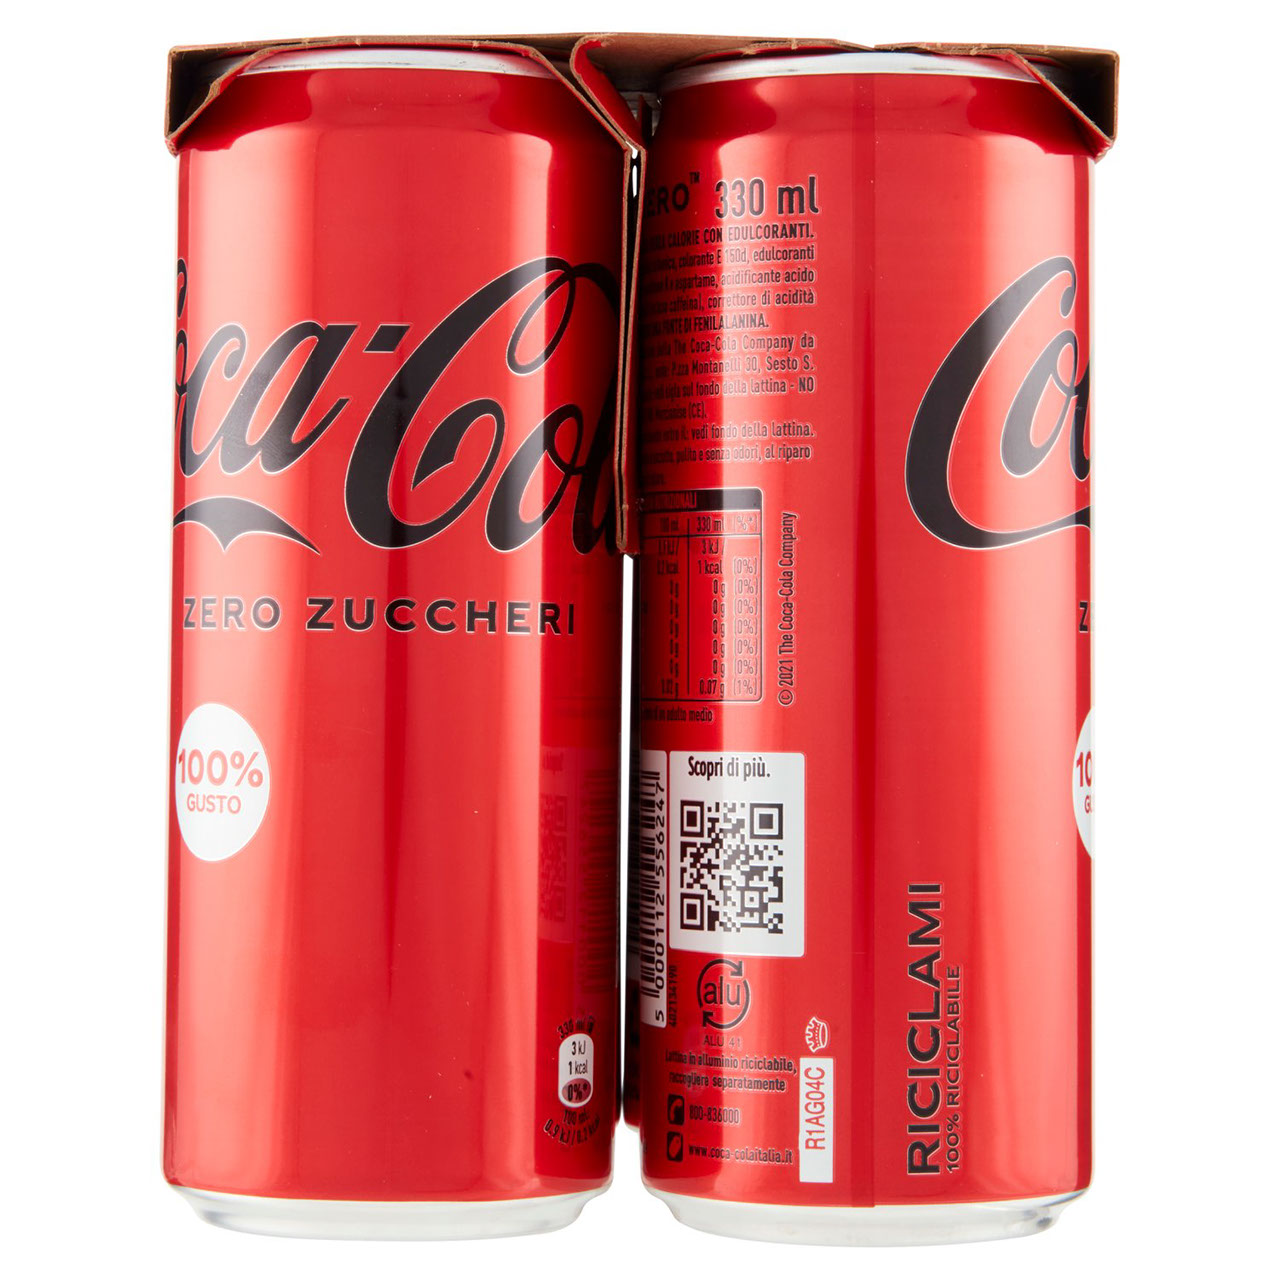 COCA-COLA Zero Zuccheri 330ml x 4 (Lattina)